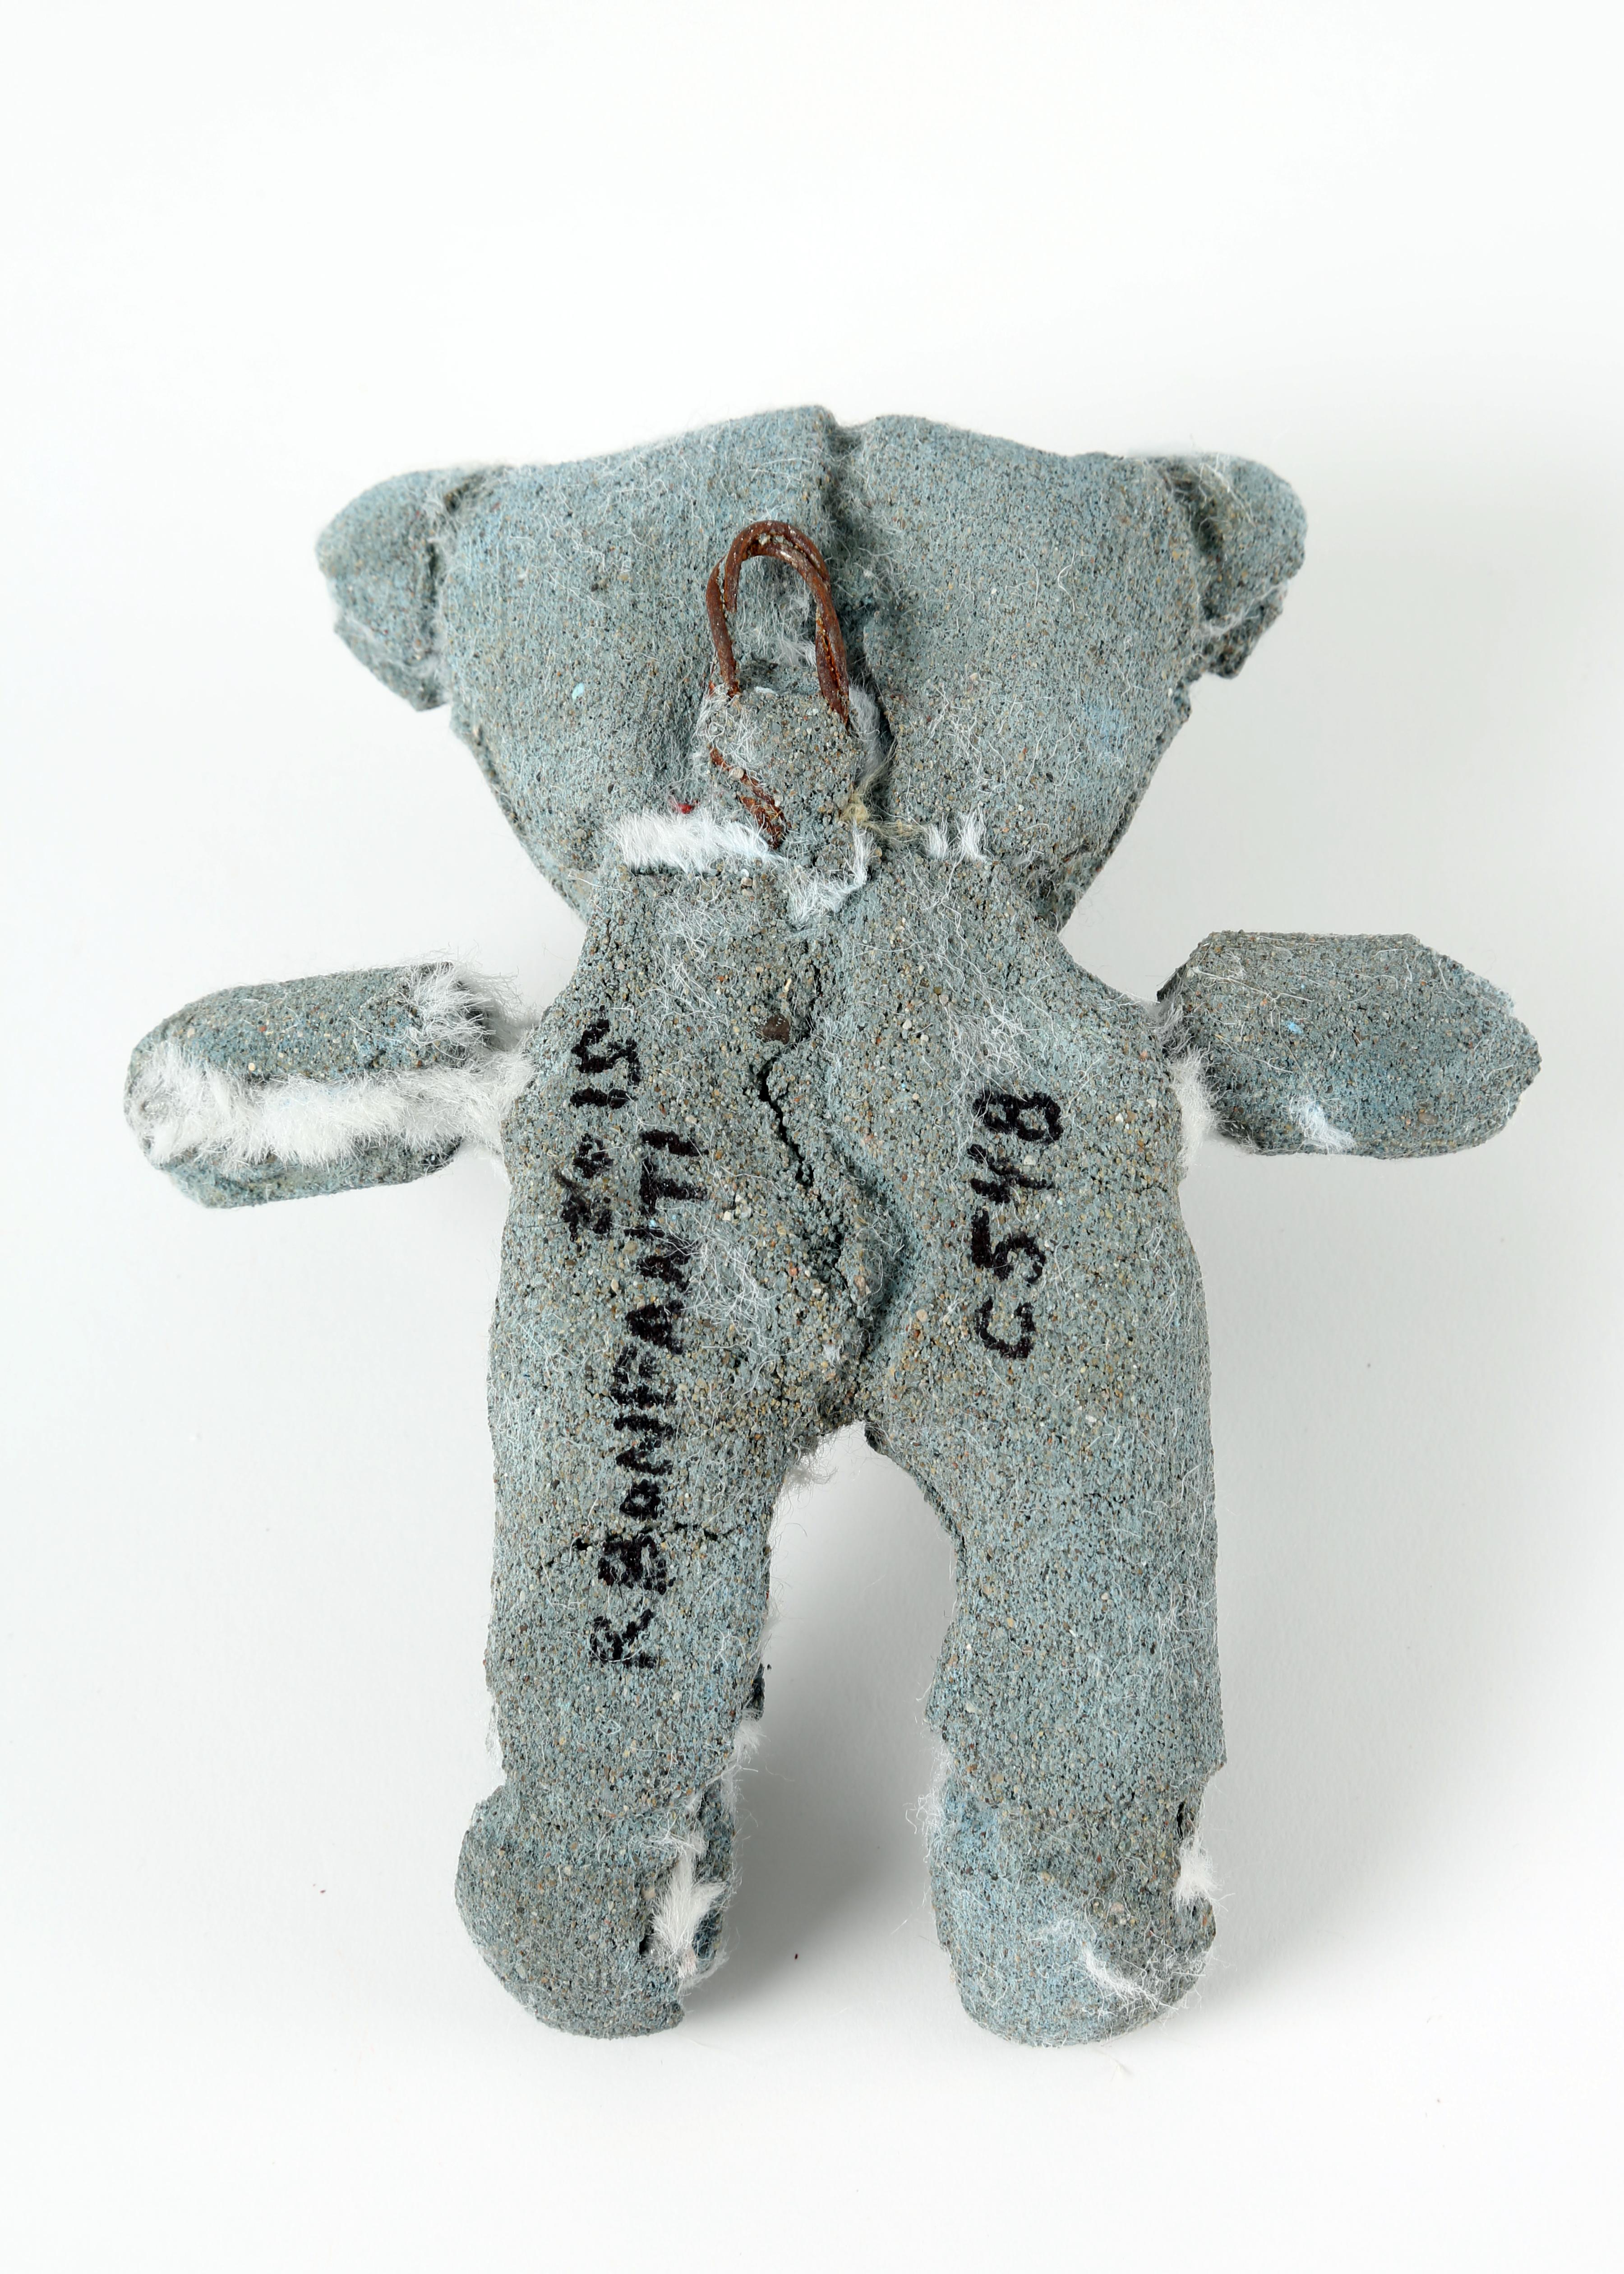 Ross Bonfanti
Teddy, 2015
Concrete, mixed media
7 x 6 1/4 x 3 inches  (17.8 x 15.9 x 7.6 cm)